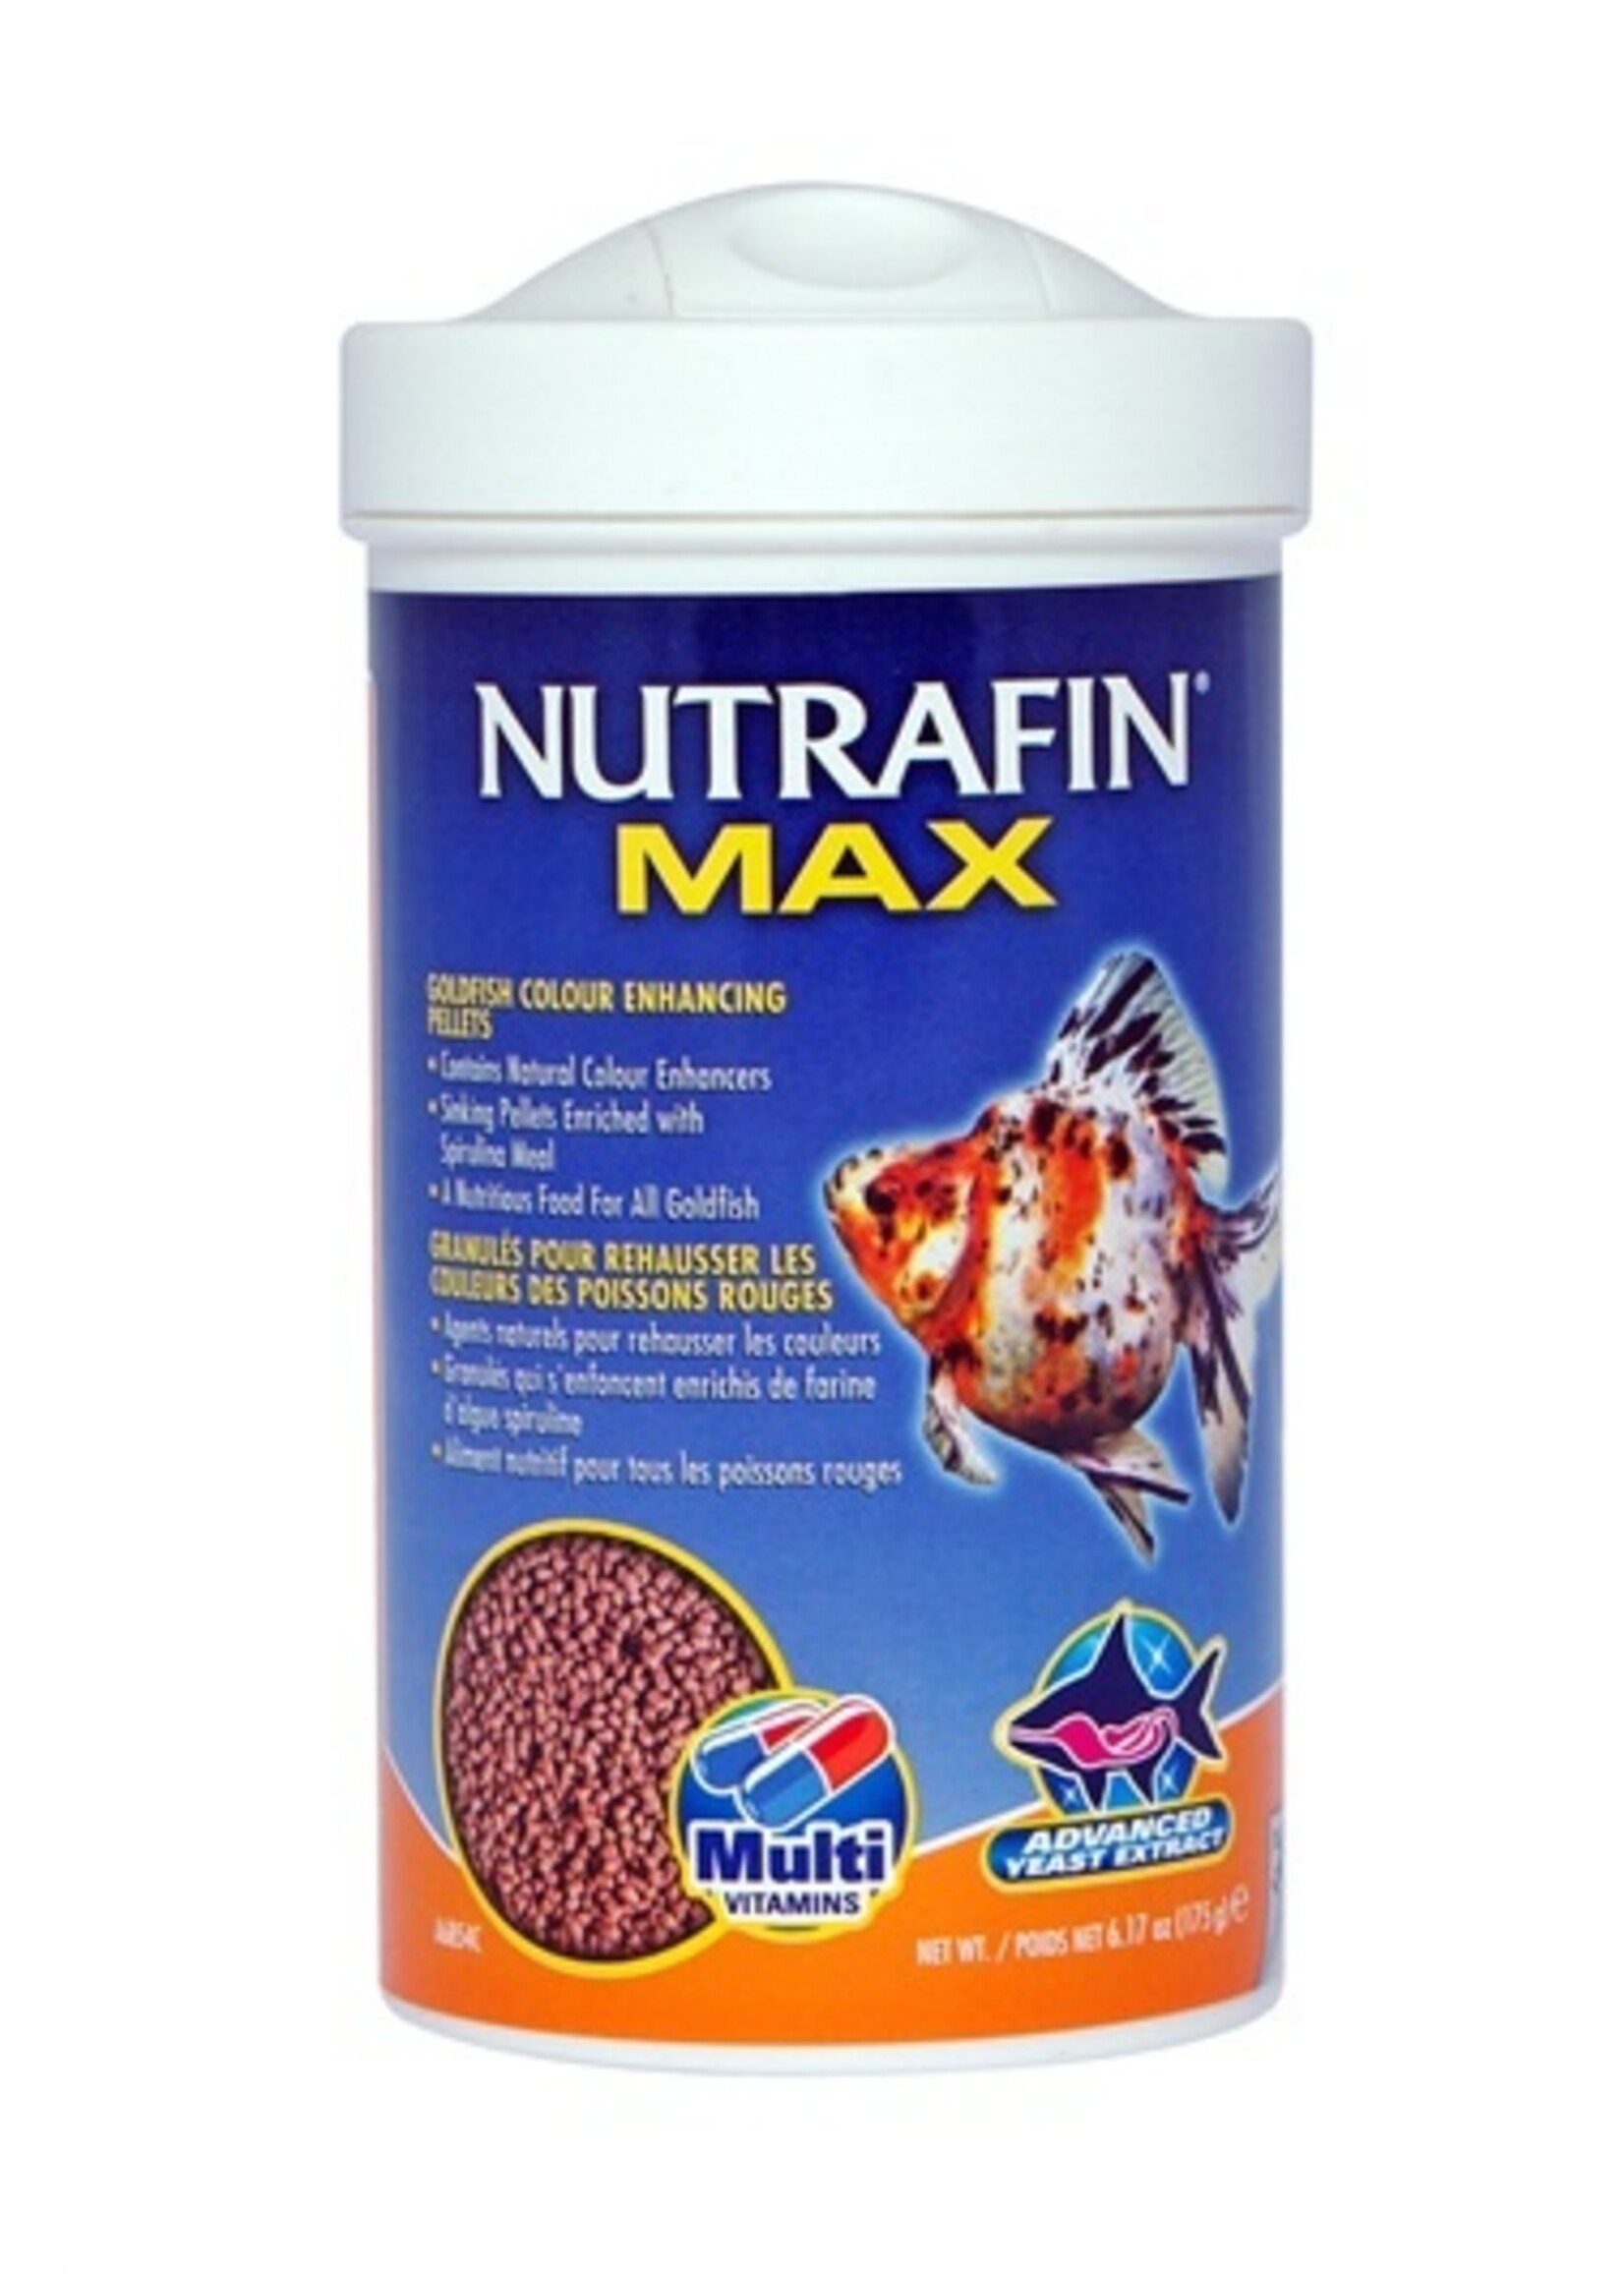 Nutrafin Nutrafin Max Goldfish Colour Enhancing Pellets